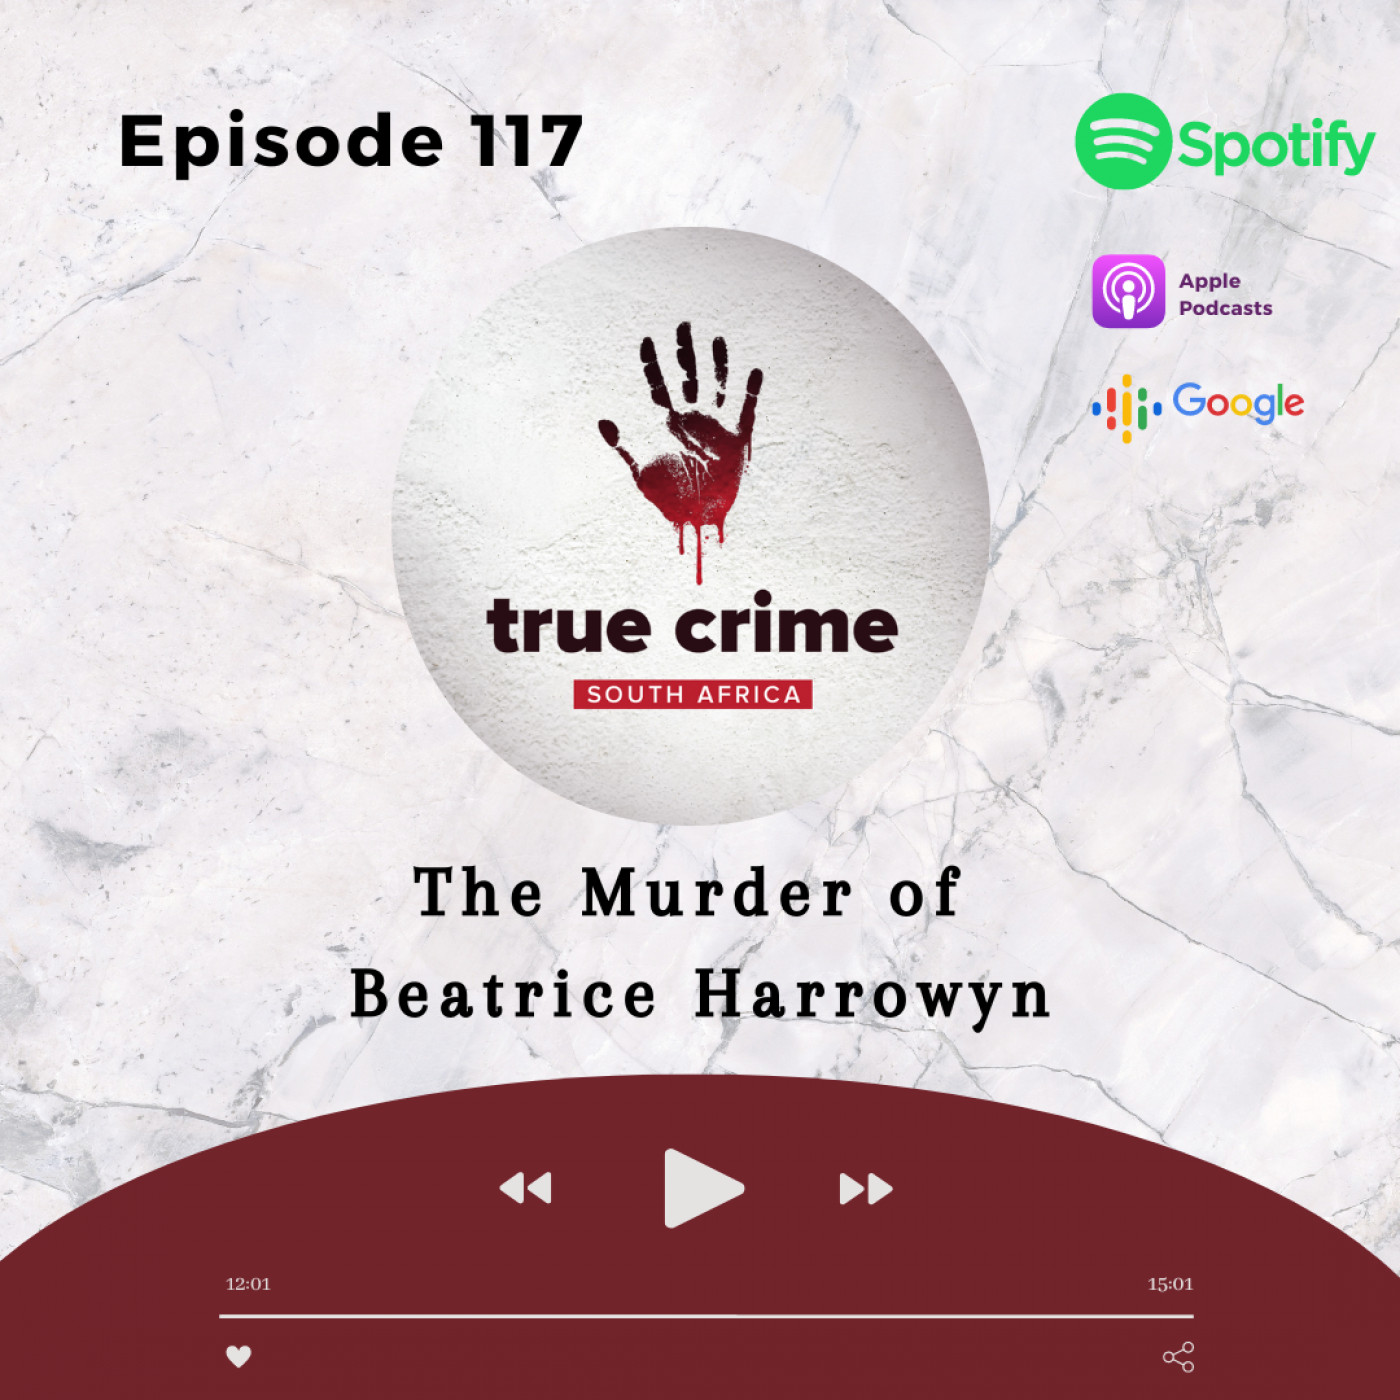 Episode 117 The Murder of Beatrice Harrowyn